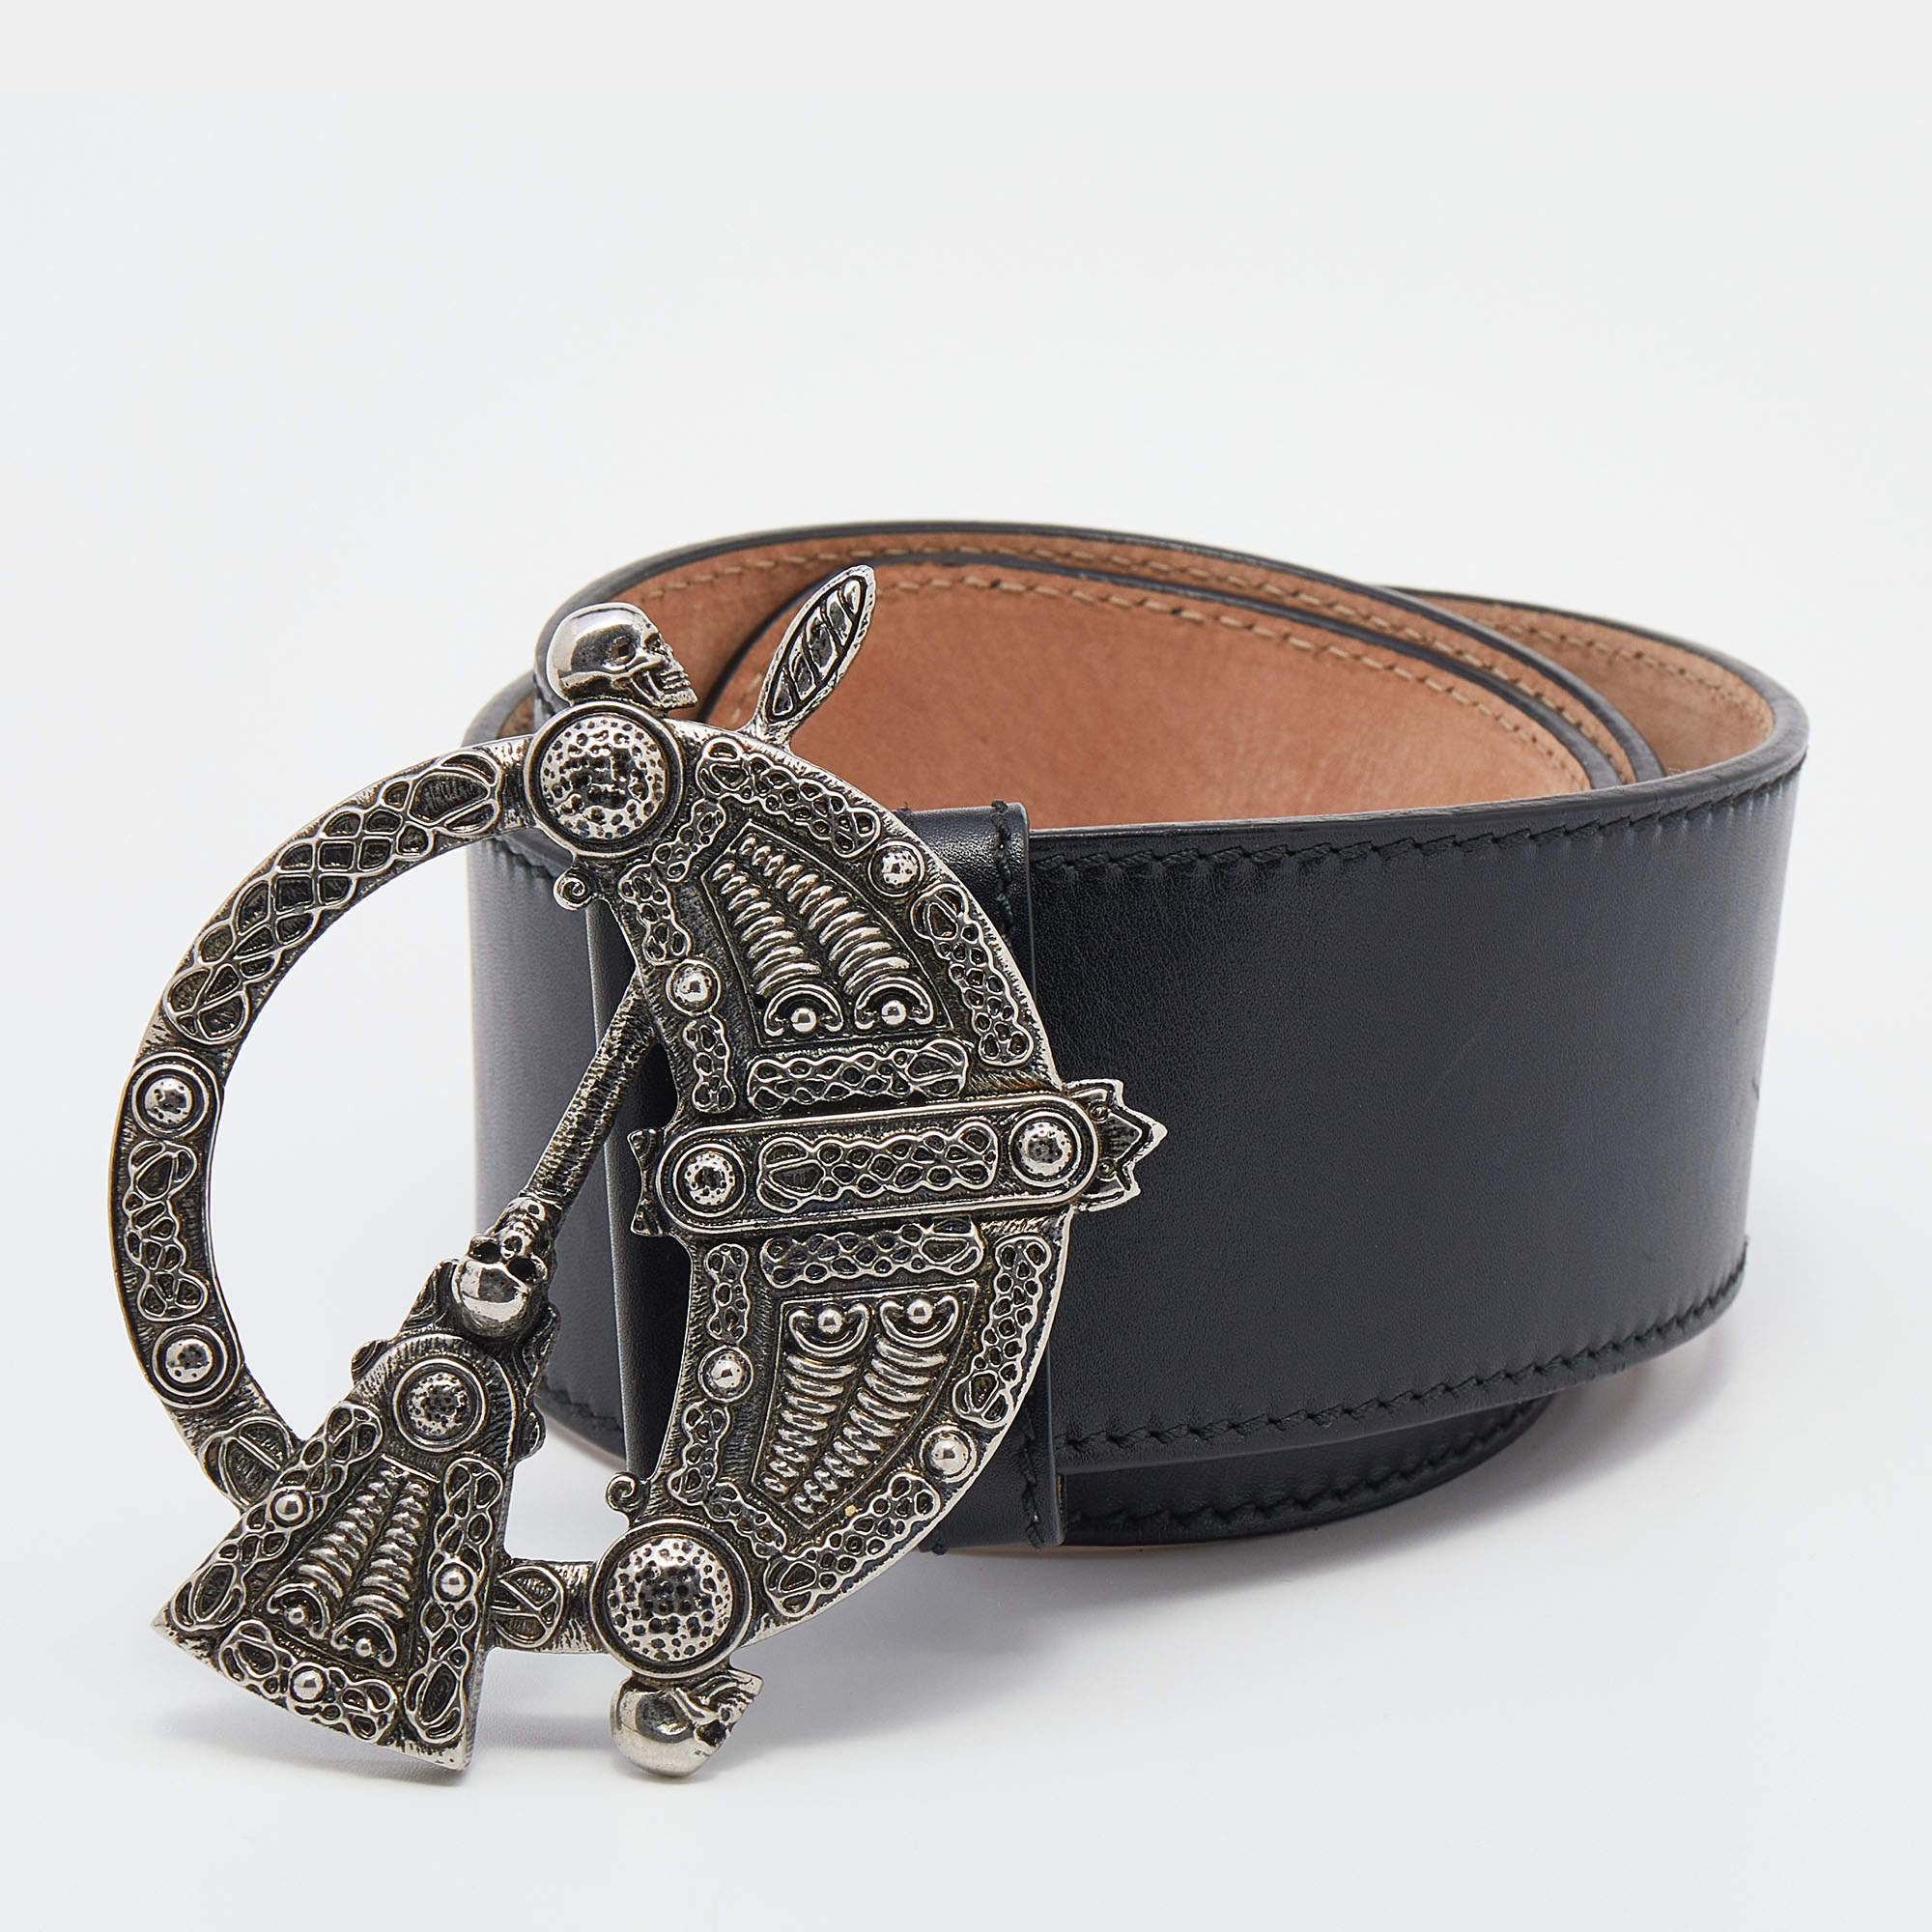 Alexander McQueen Black Leather Waist Belt 80cm